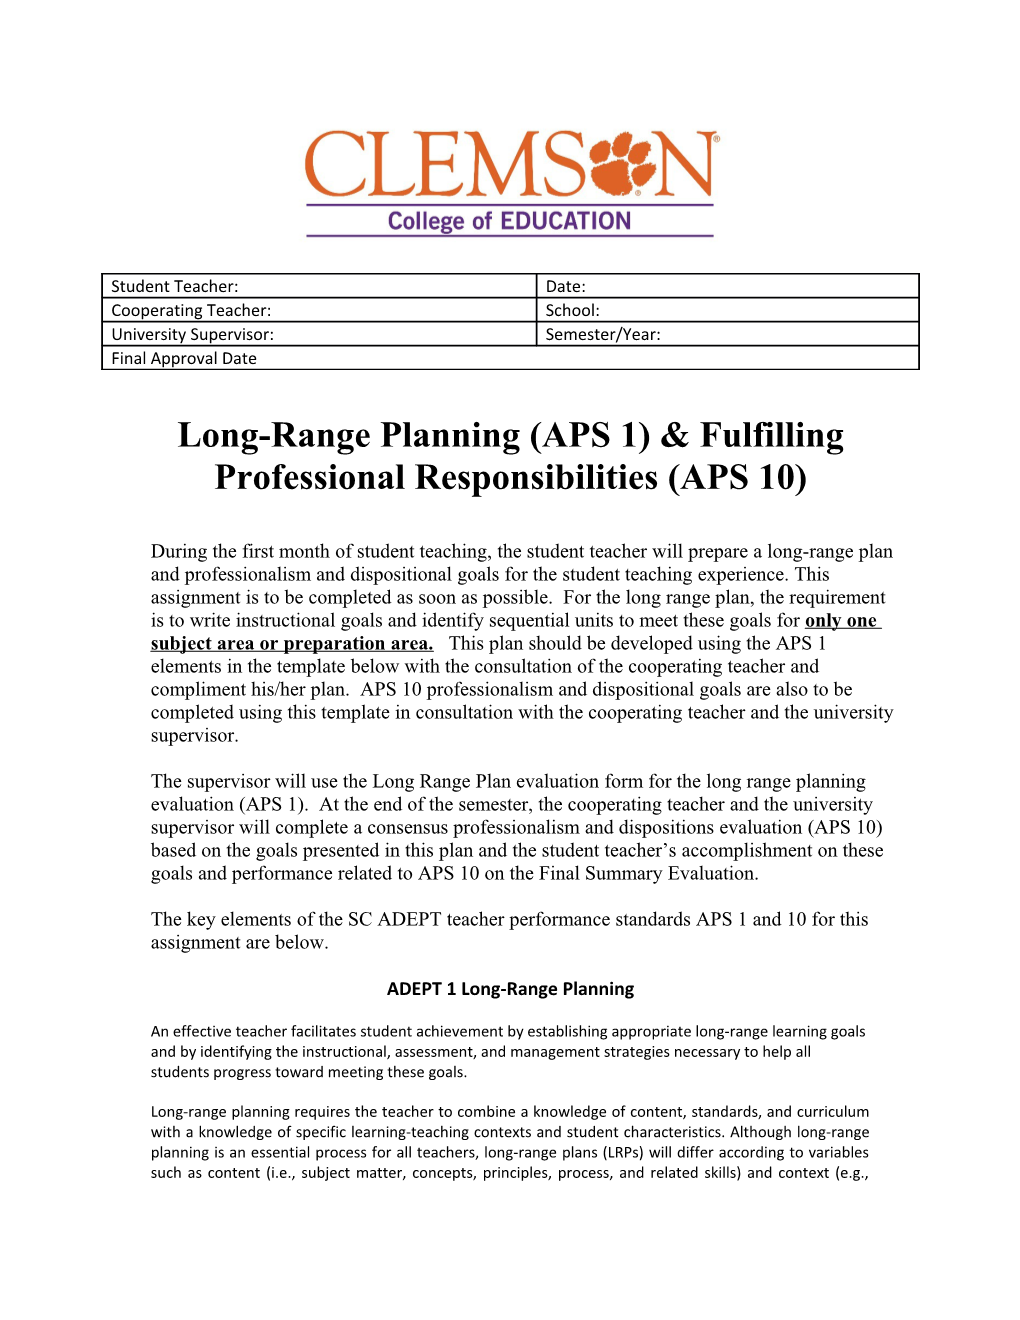 Long-Range Planning (APS 1) & Fulfilling Professional Responsibilities (APS 10)